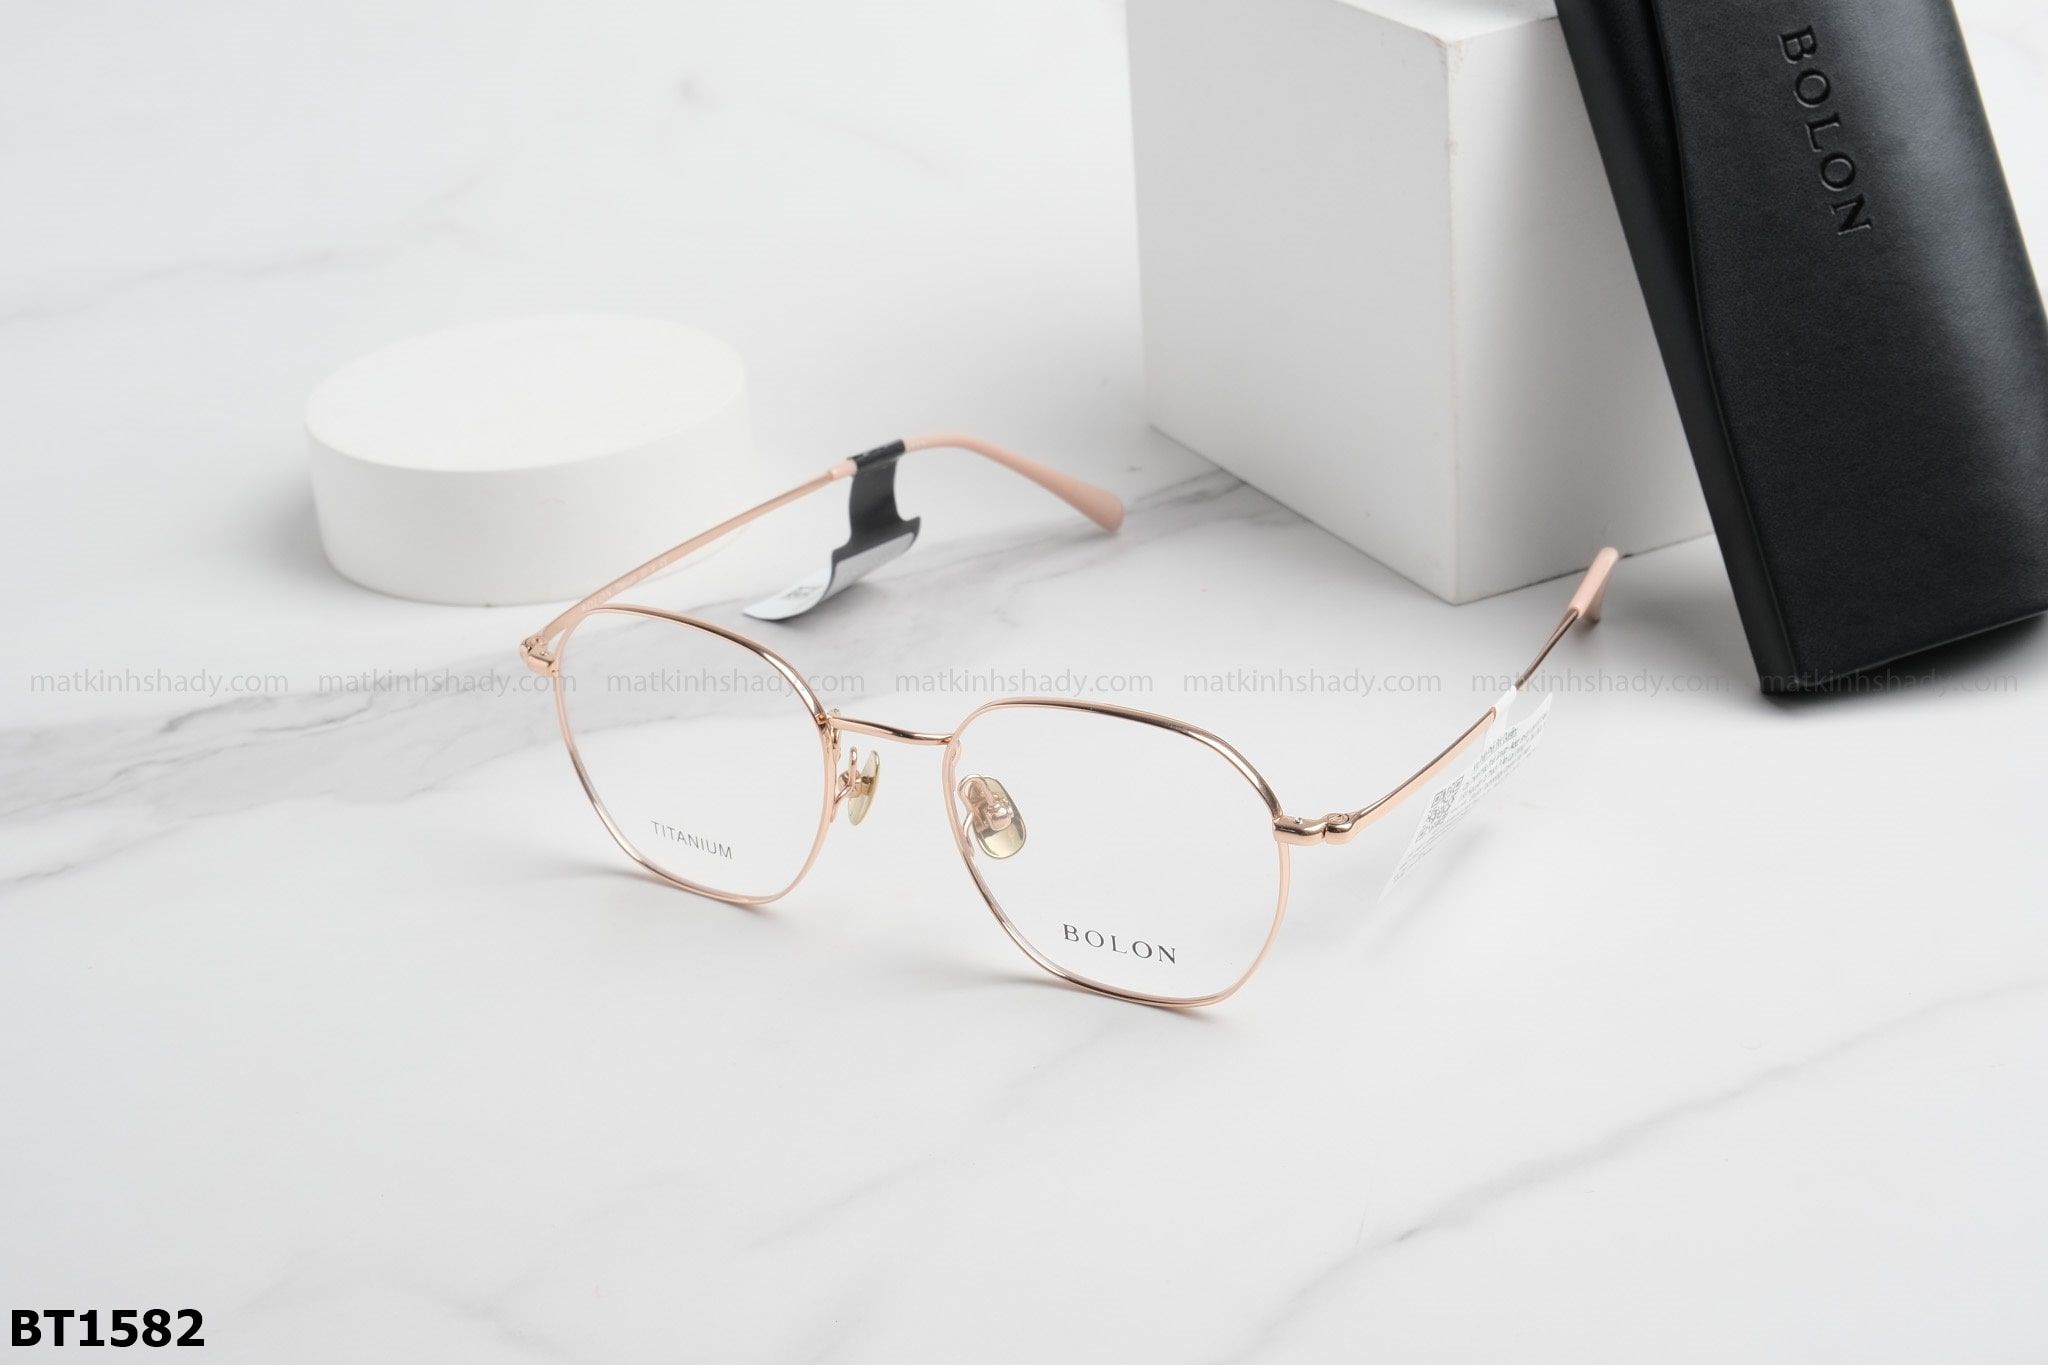  Bolon Eyewear - Glasses - BT1582 